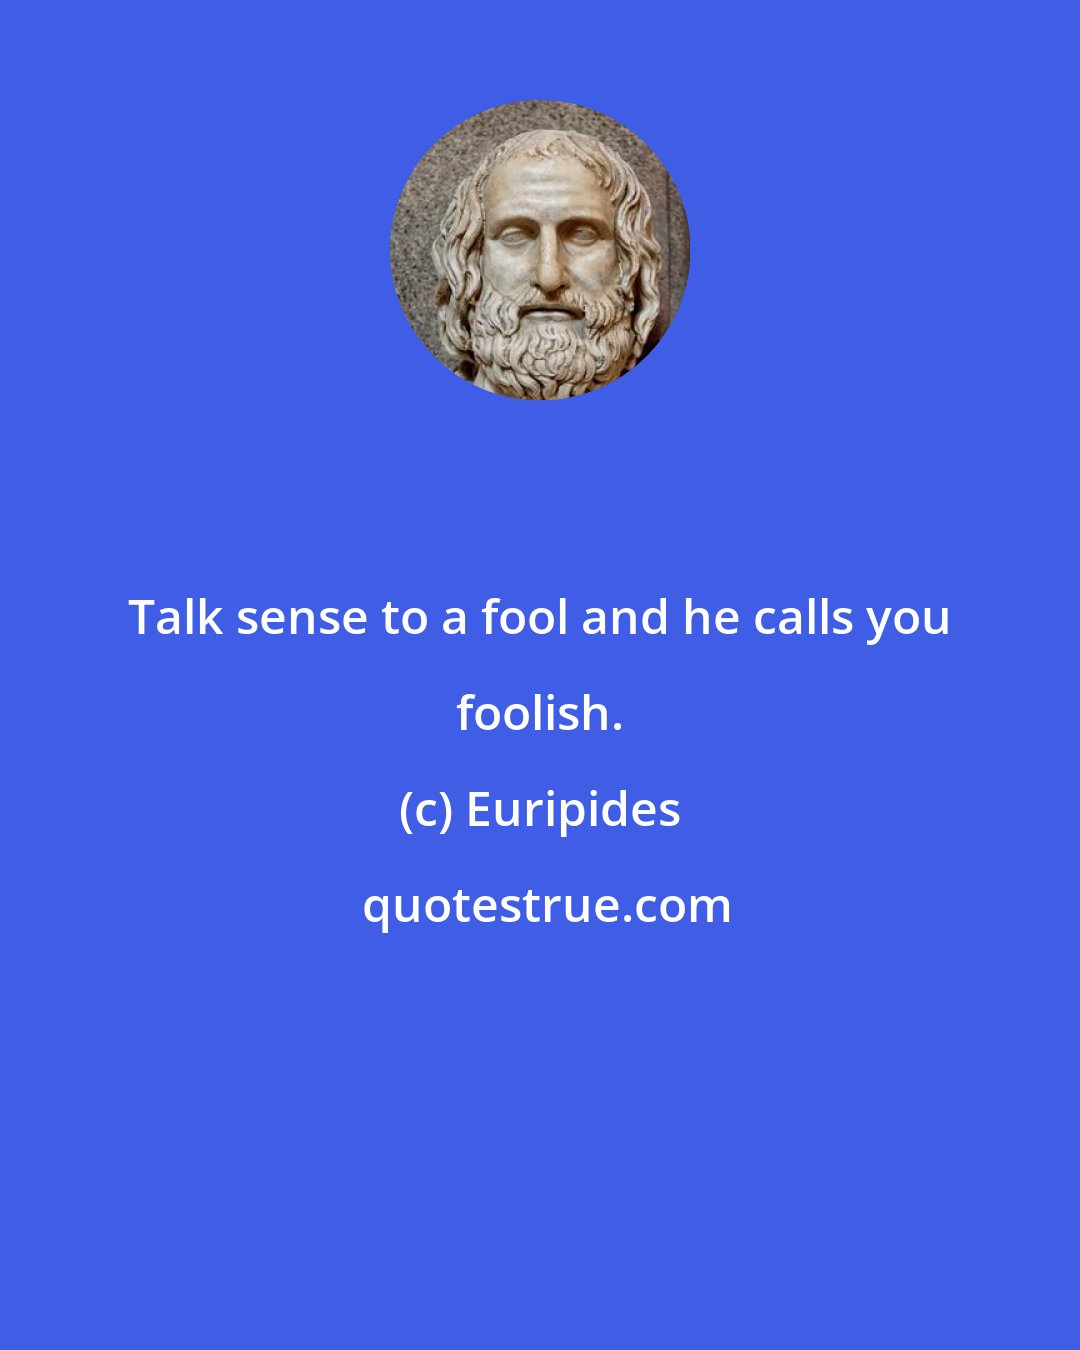 Euripides: Talk sense to a fool and he calls you foolish.